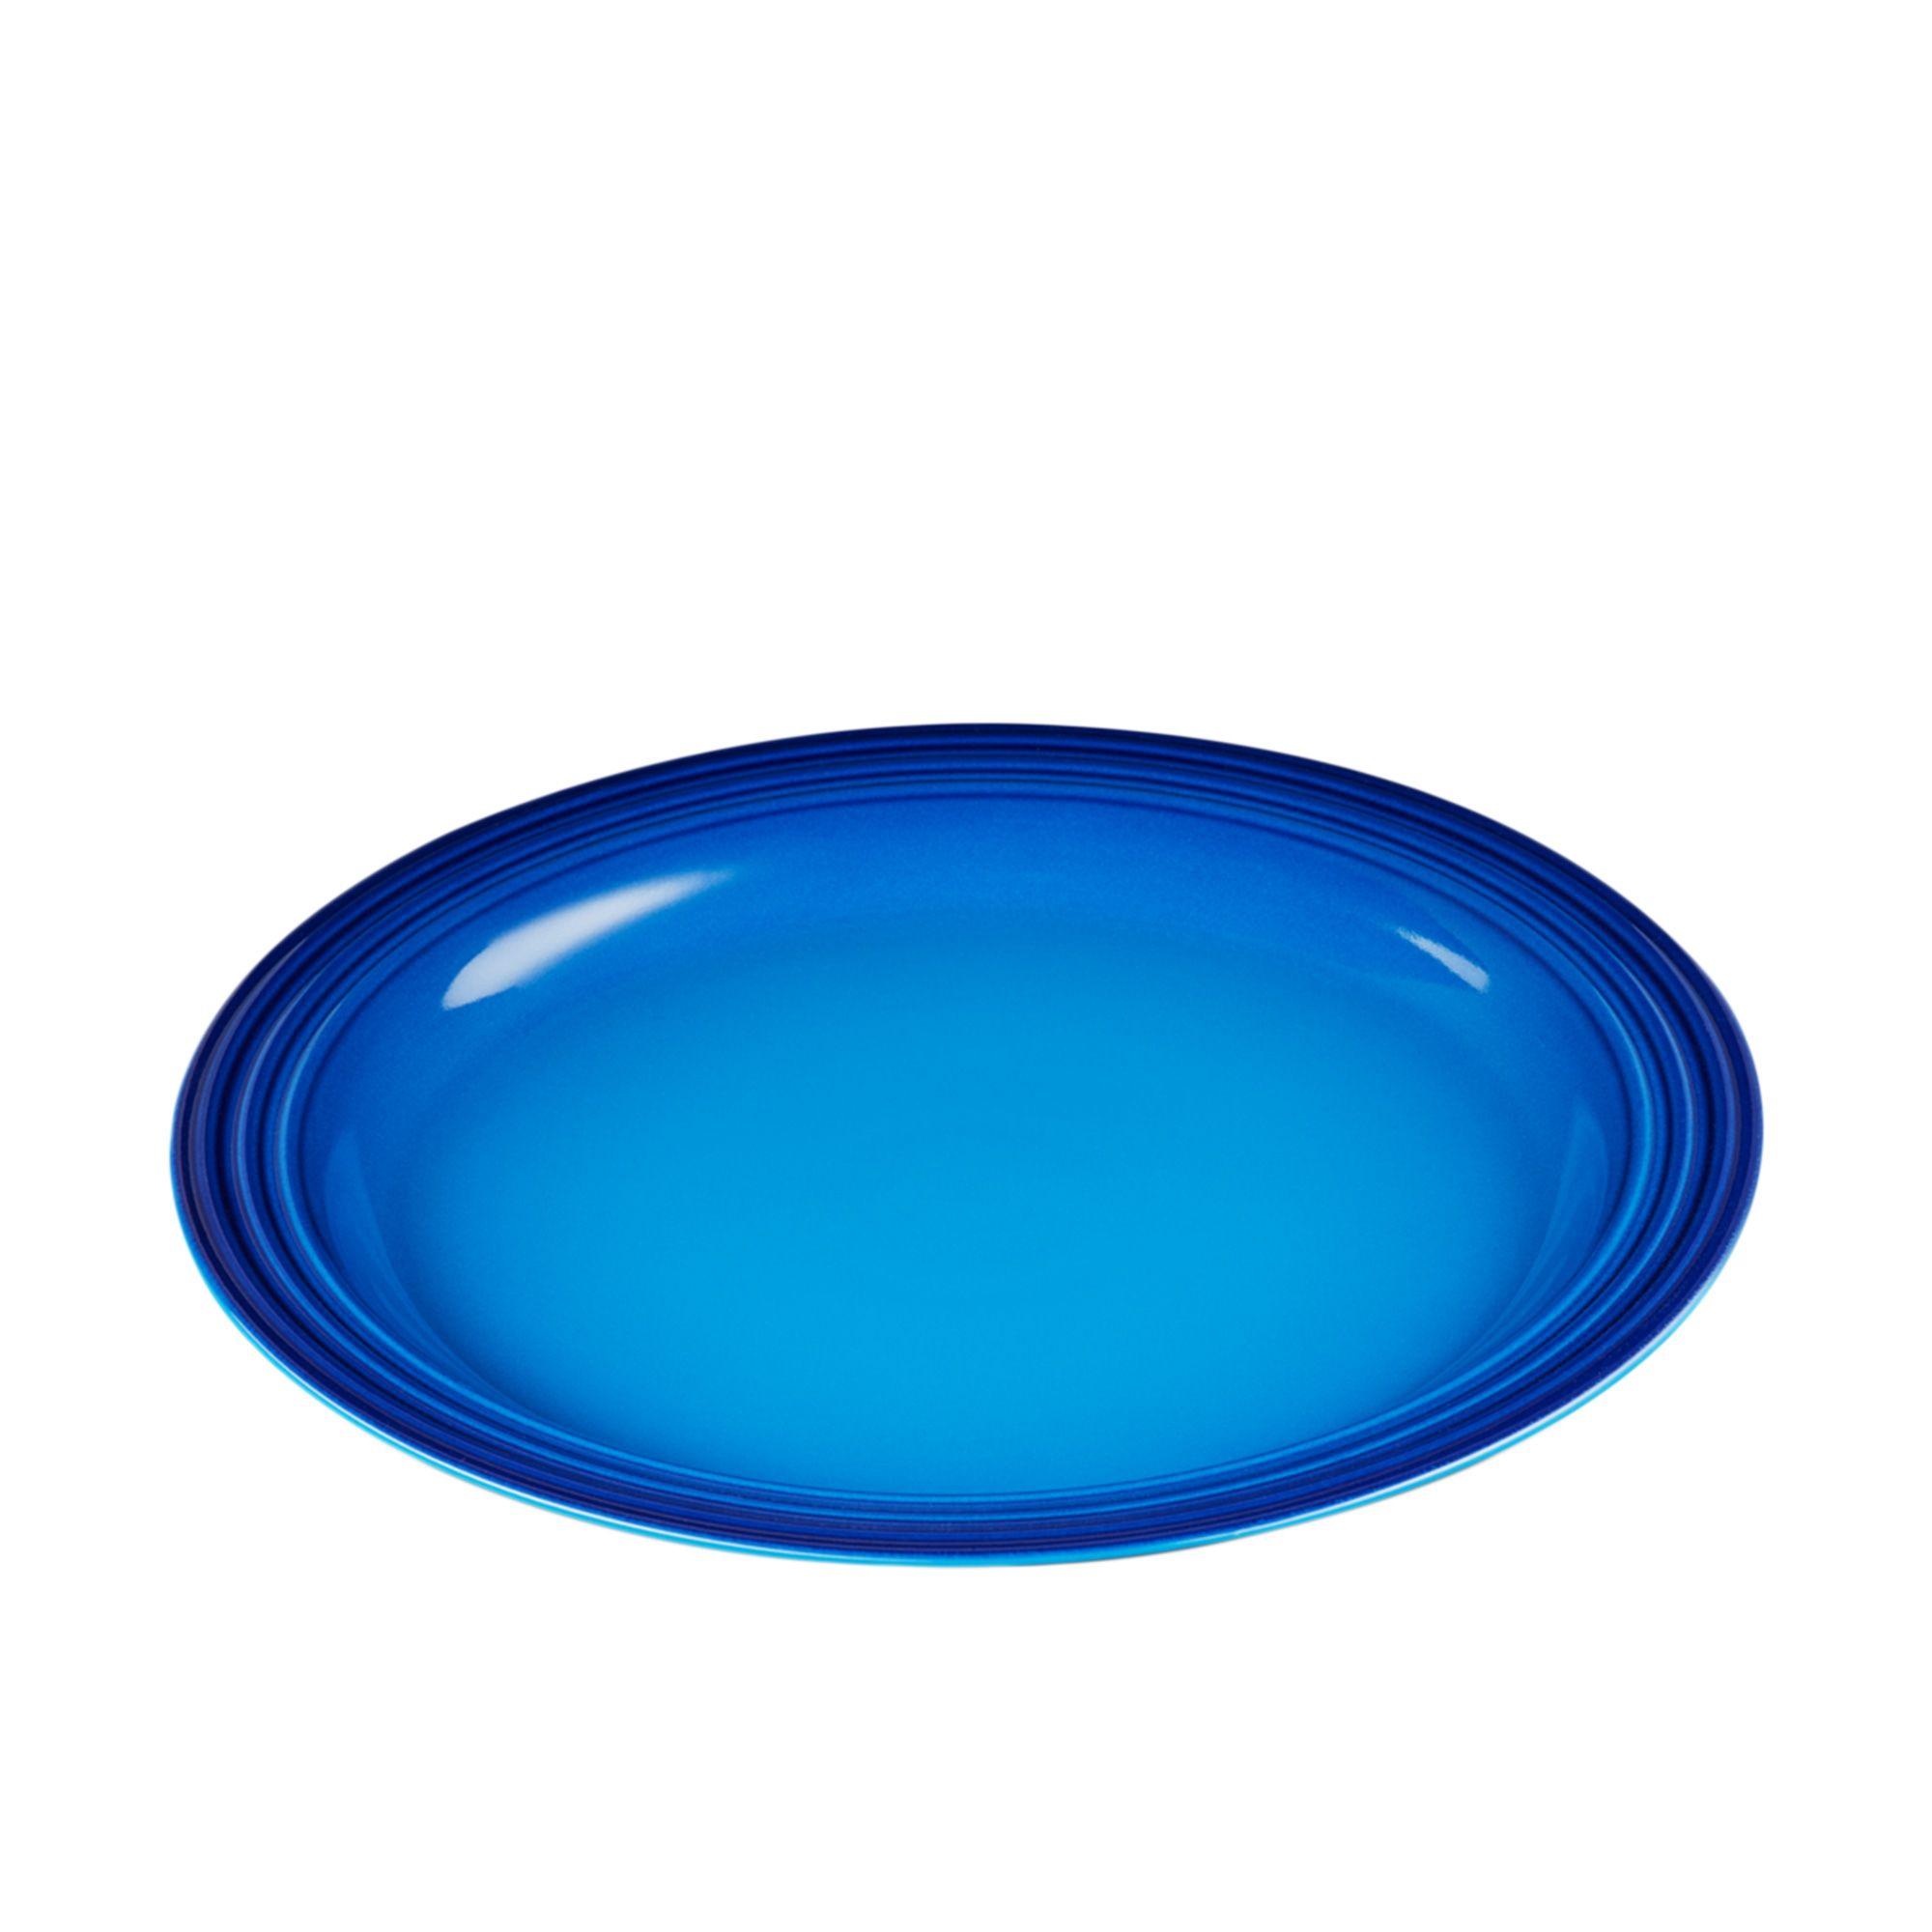 Le Creuset Stoneware Dinner Plate Set of 4 Azure Blue Image 3